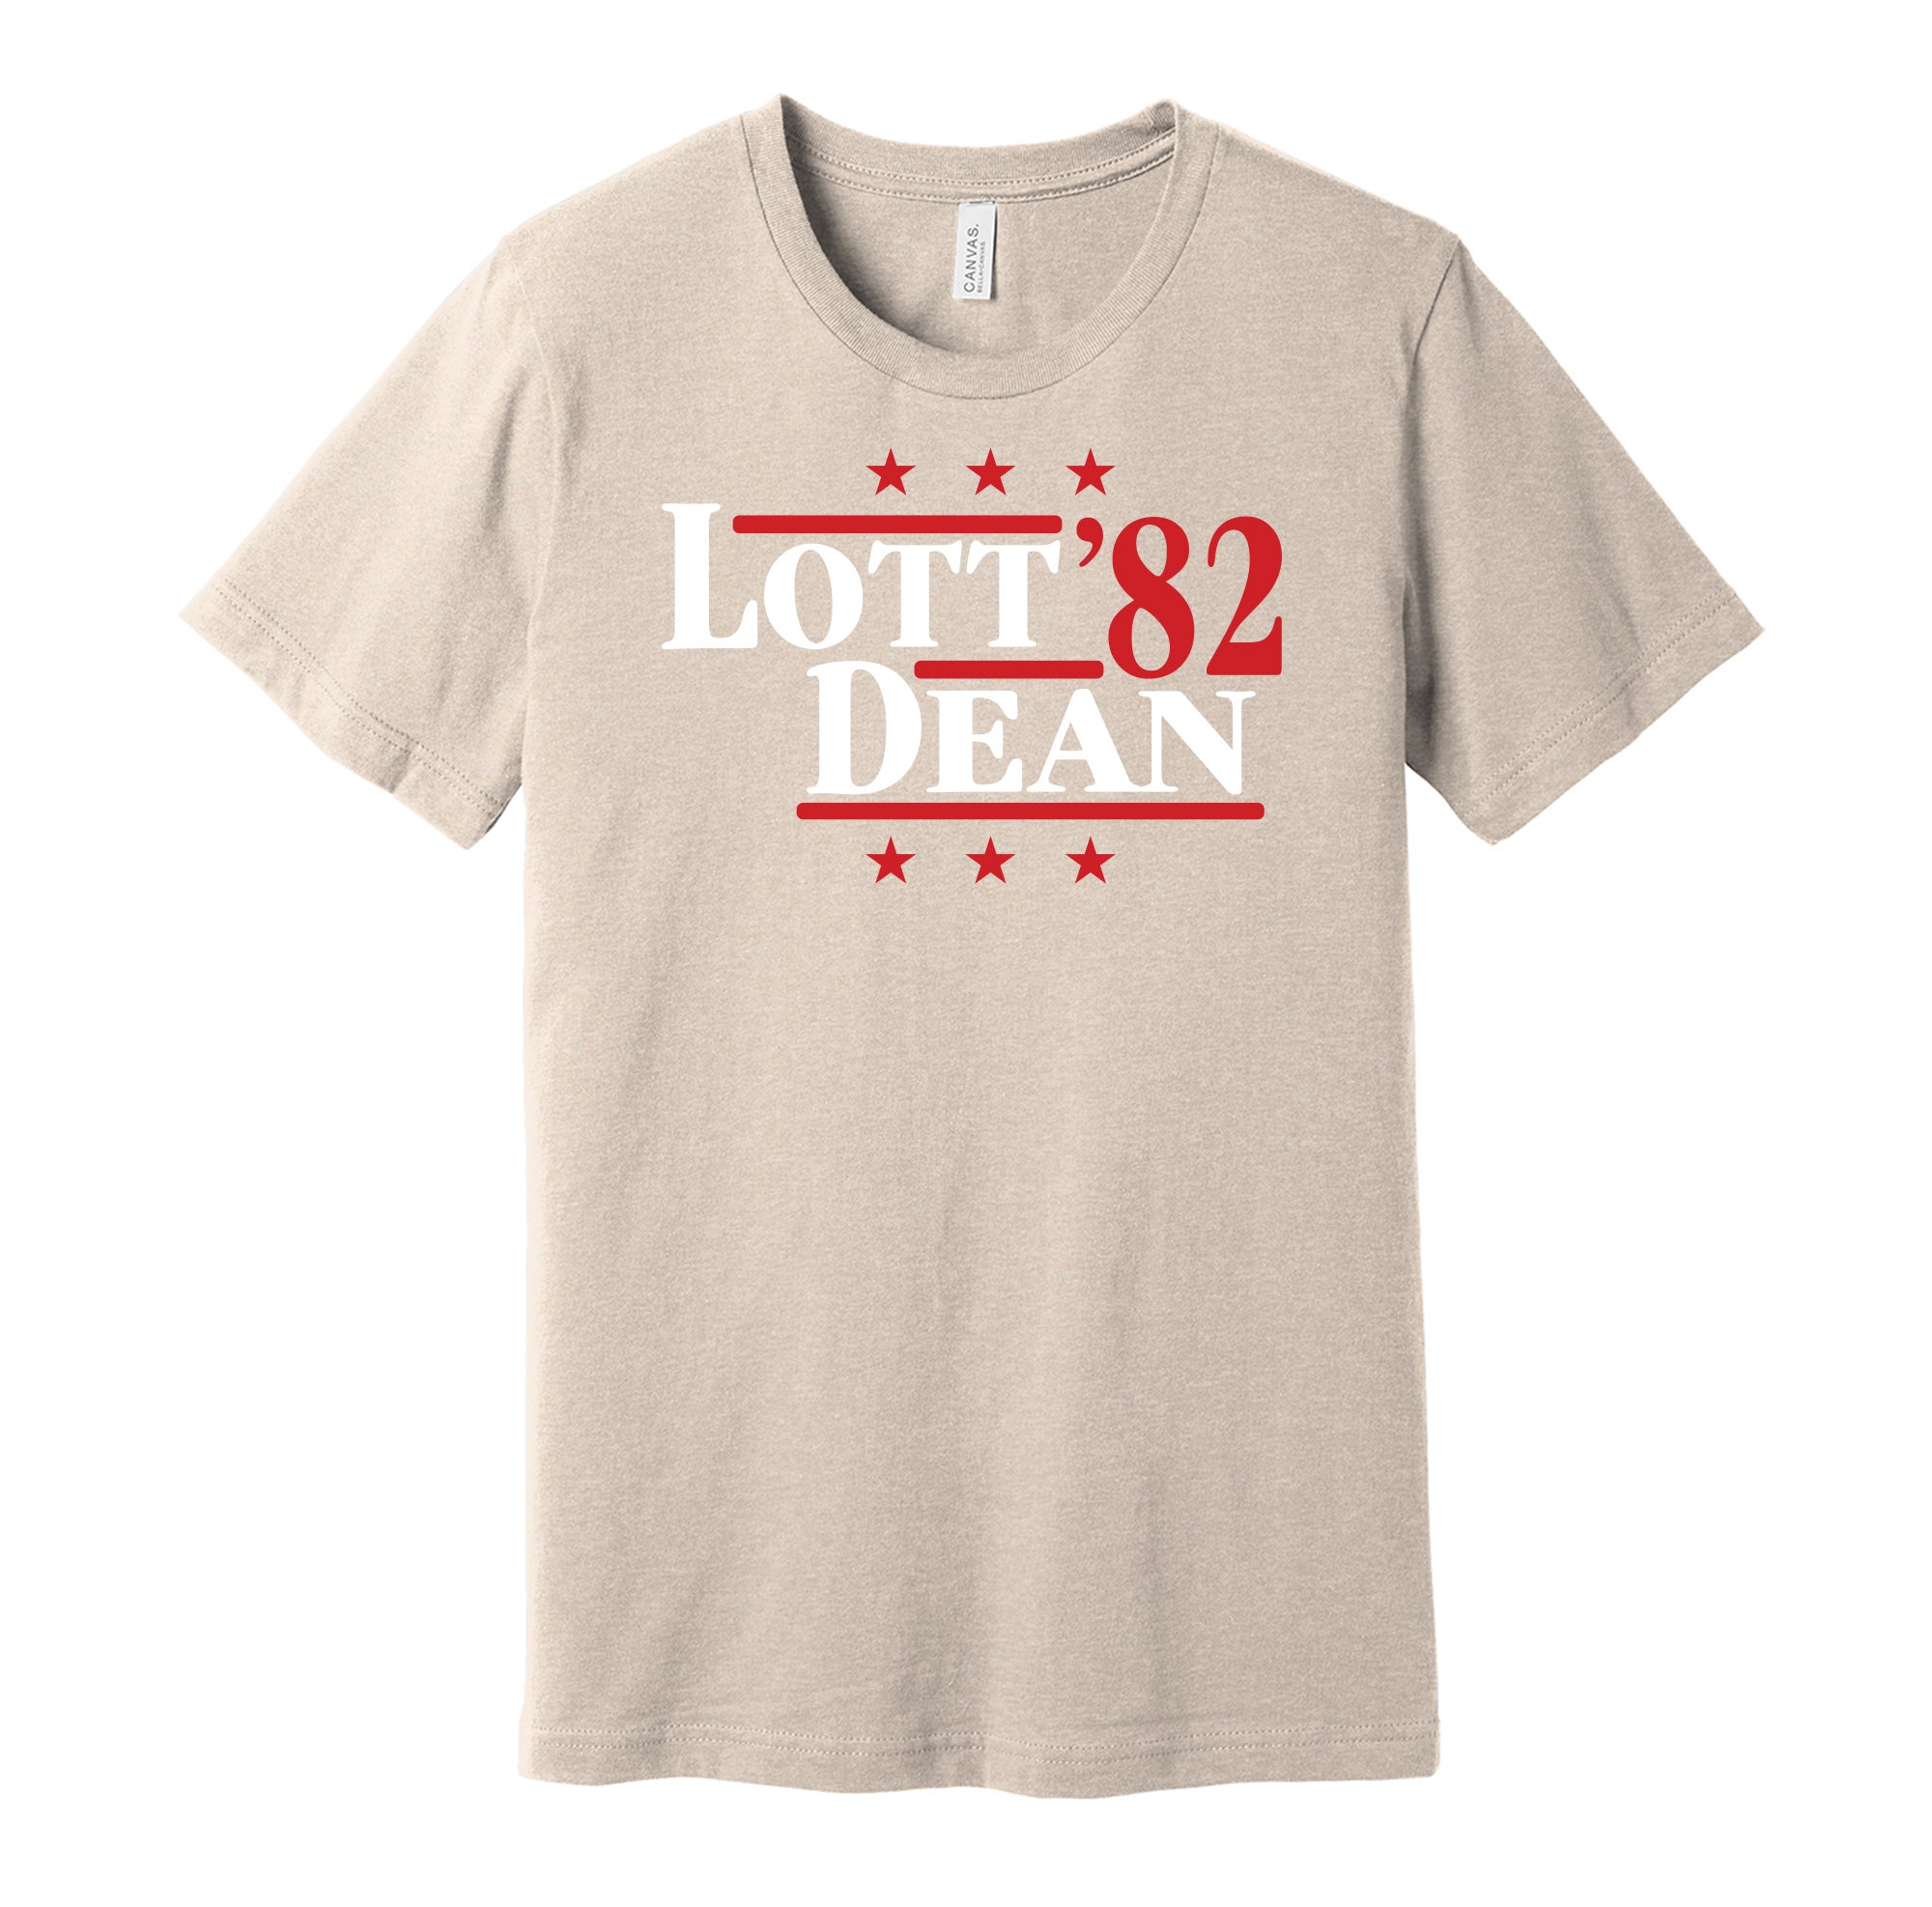 Lott & Dean '82 - San Francisco Football Legends Political Campaign Parody T-Shirt - Hyper Than Hype Shirts L / Tan Shirt